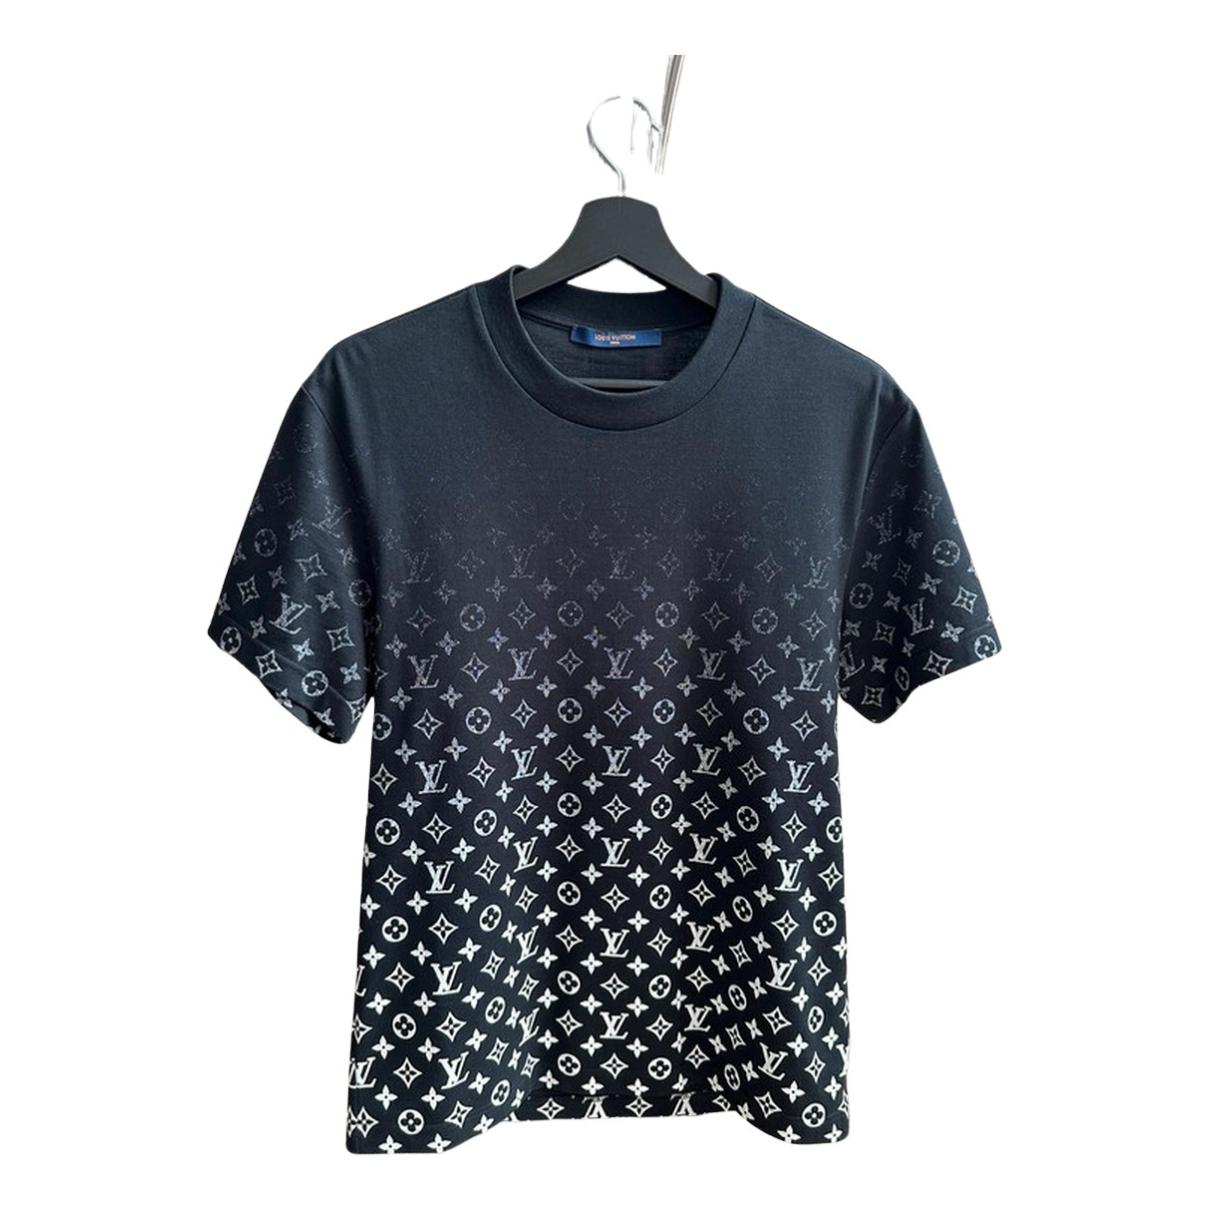 T-shirt Louis Vuitton Black size XS International in Cotton - 33125351